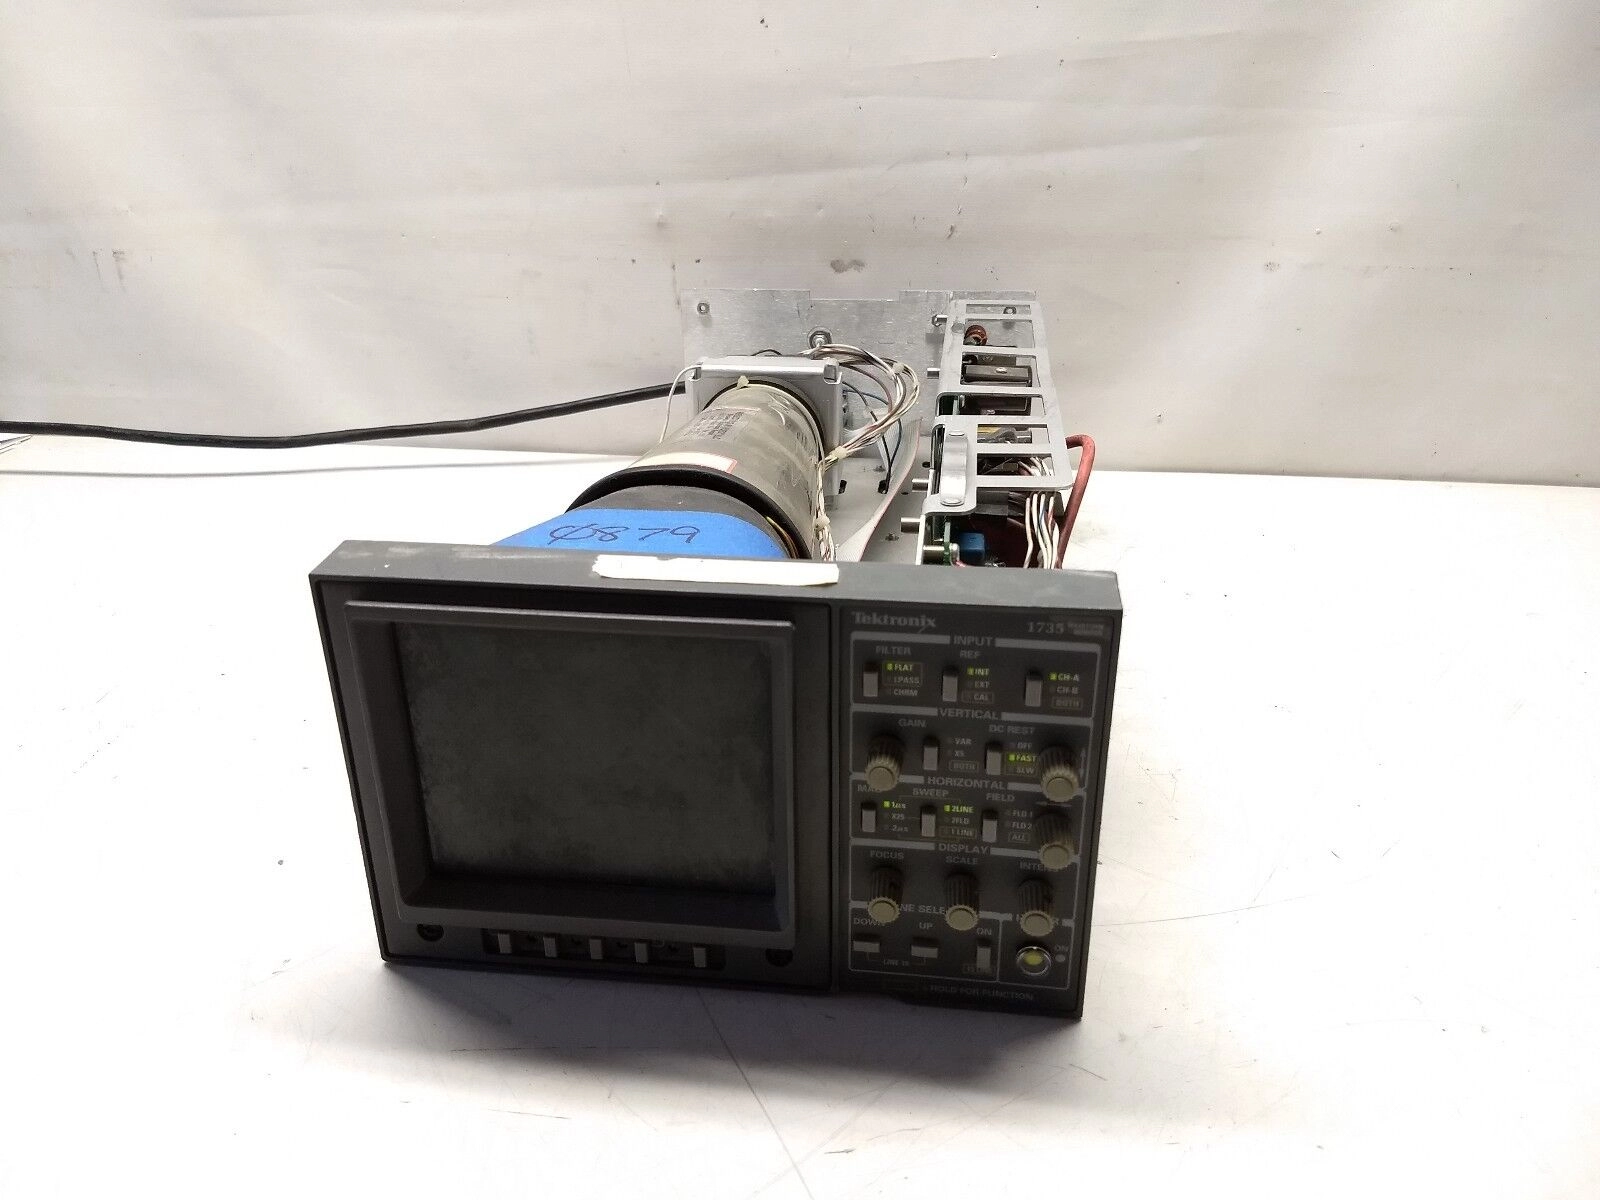 Tektronix 1735 Waveform Monitor